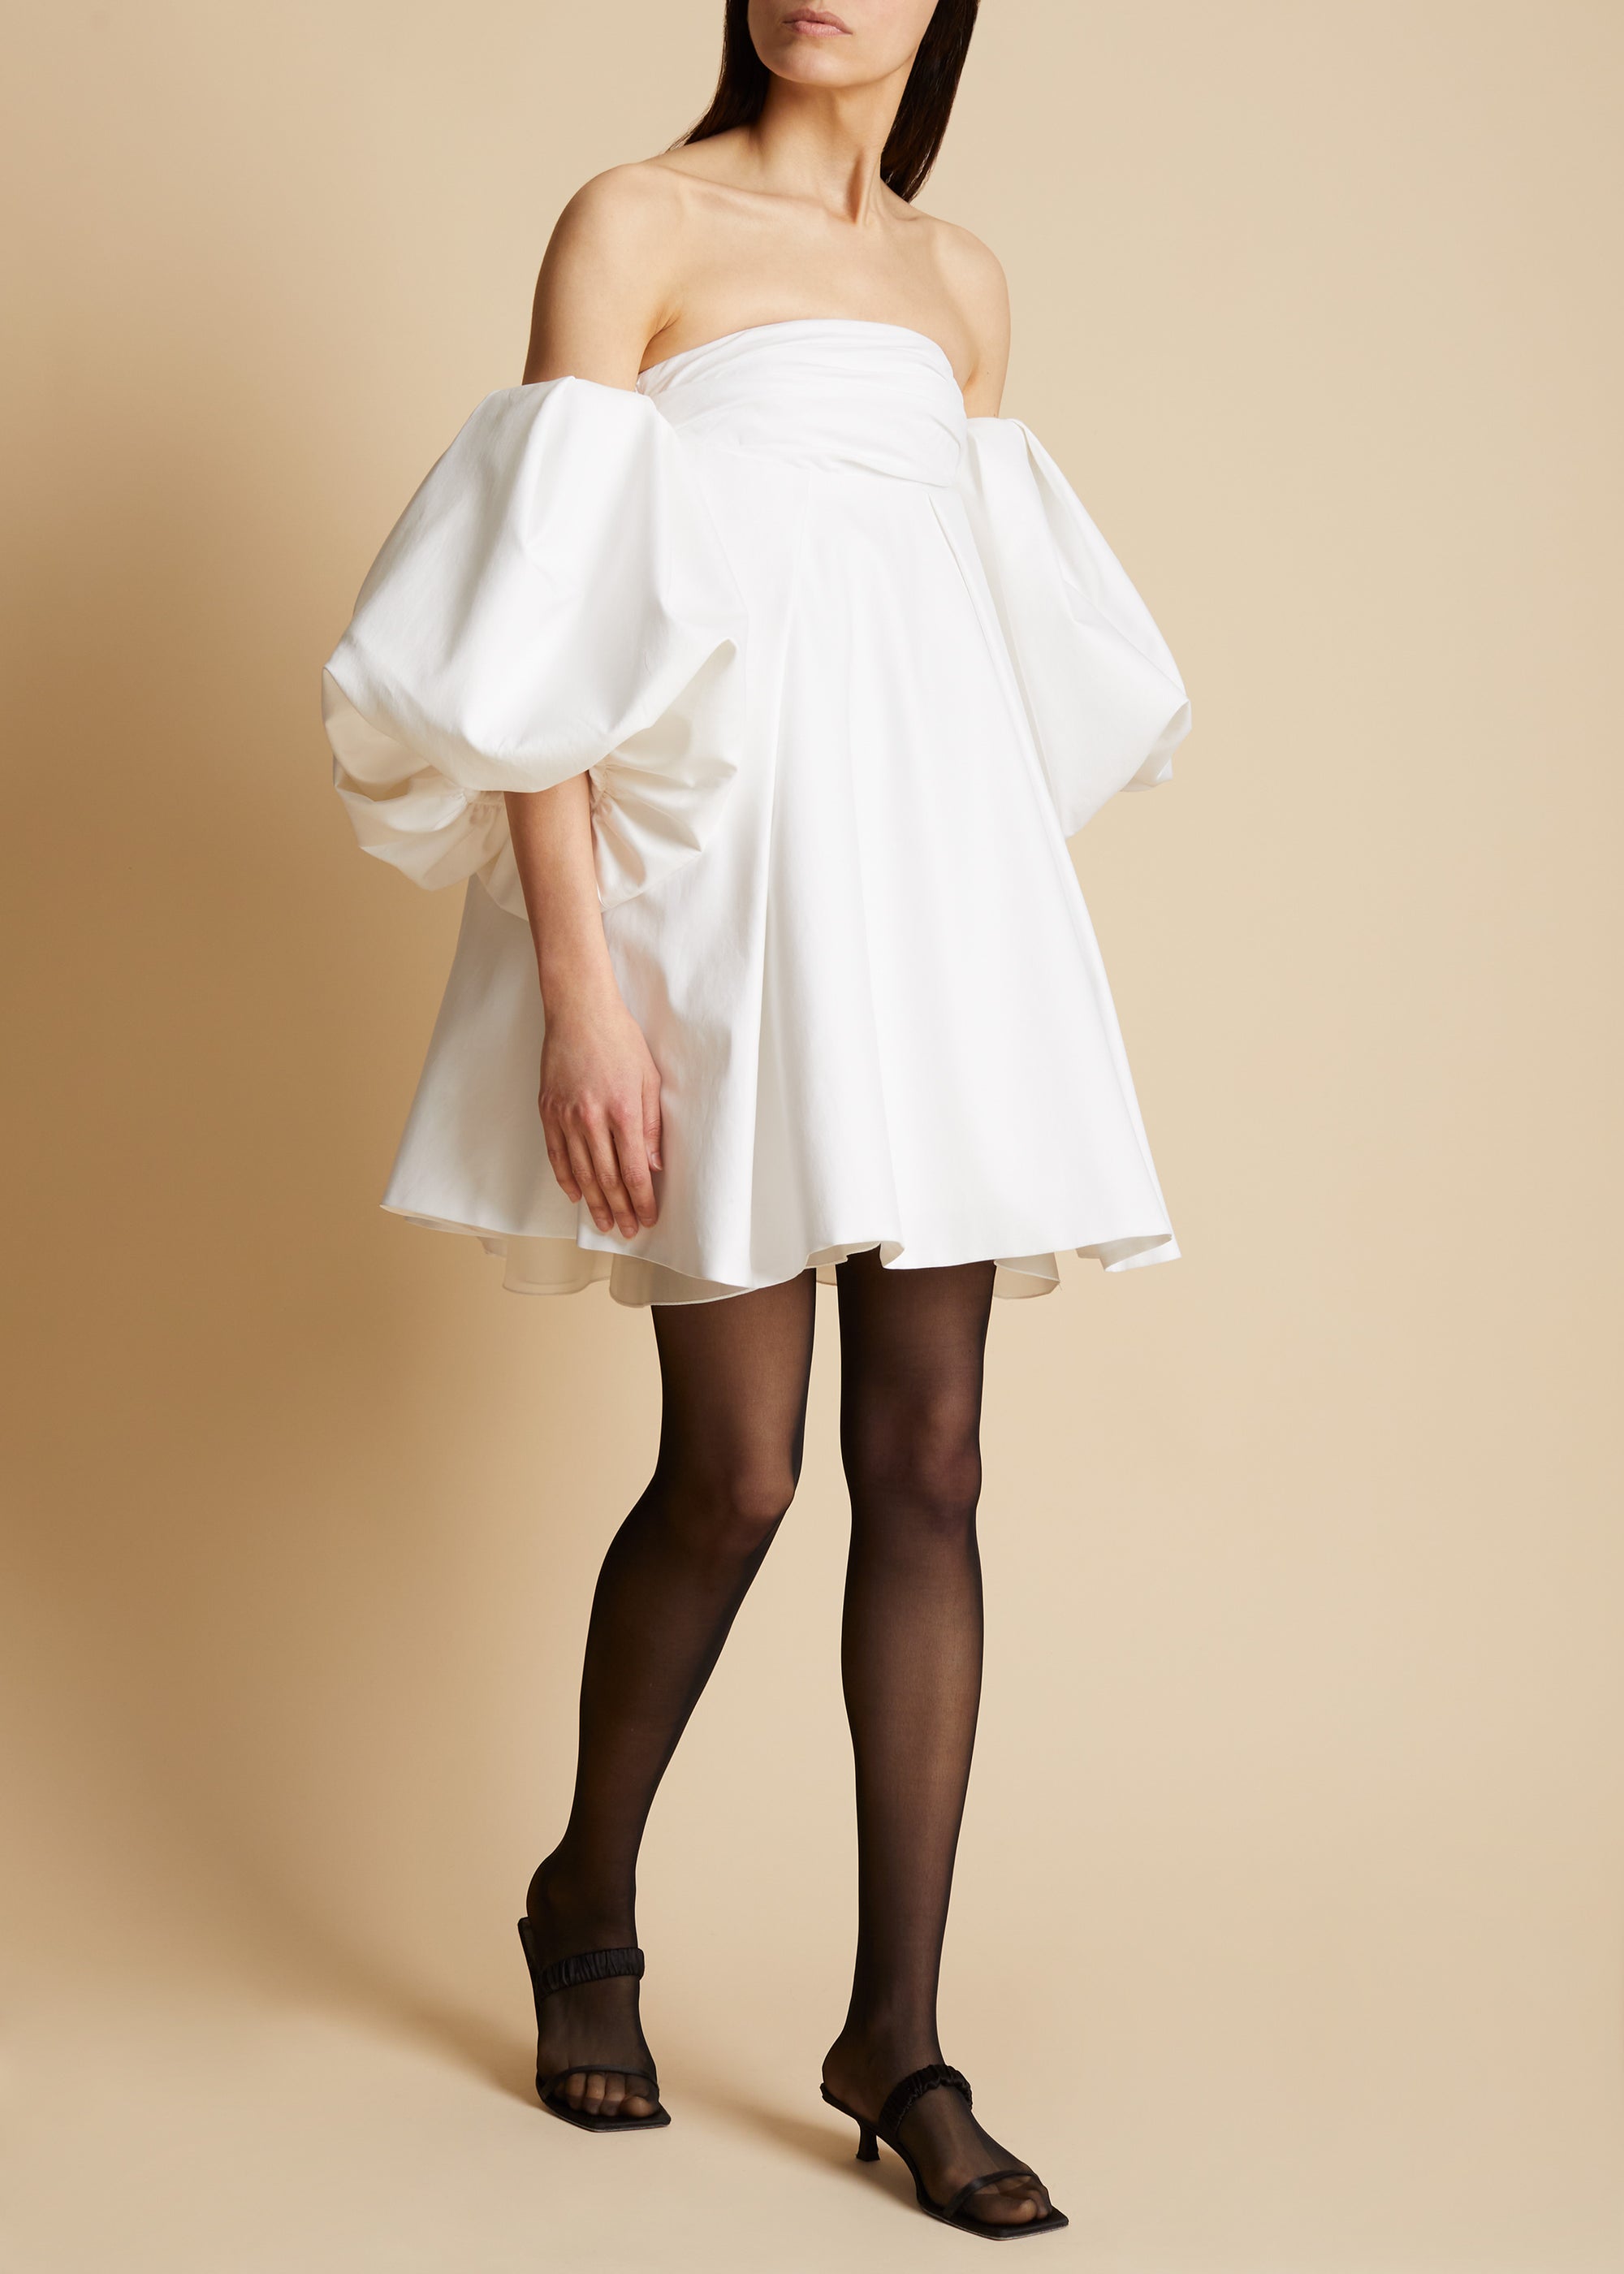 Katerina dress - White